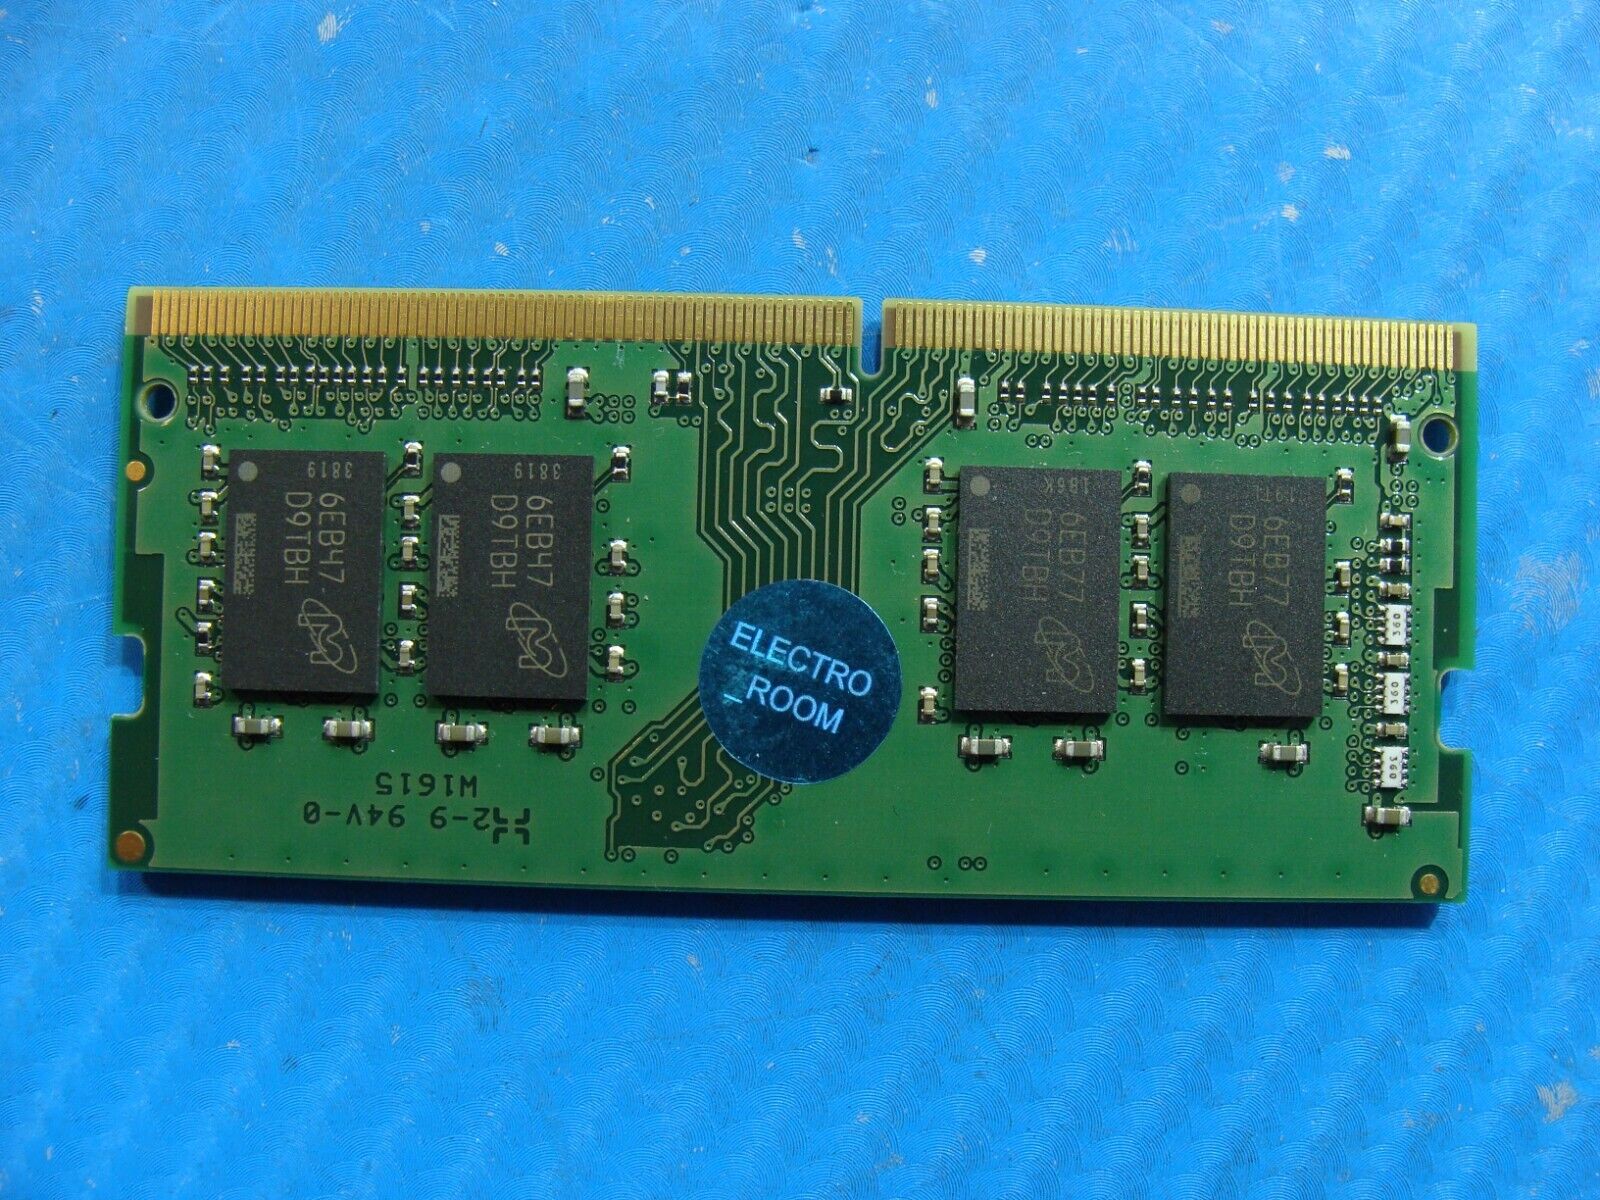 Acer E5-575G Kingston 8GB 1Rx8 PC4-2400R Memory RAM SO-DIMM ACR24D4S7S8MB-8